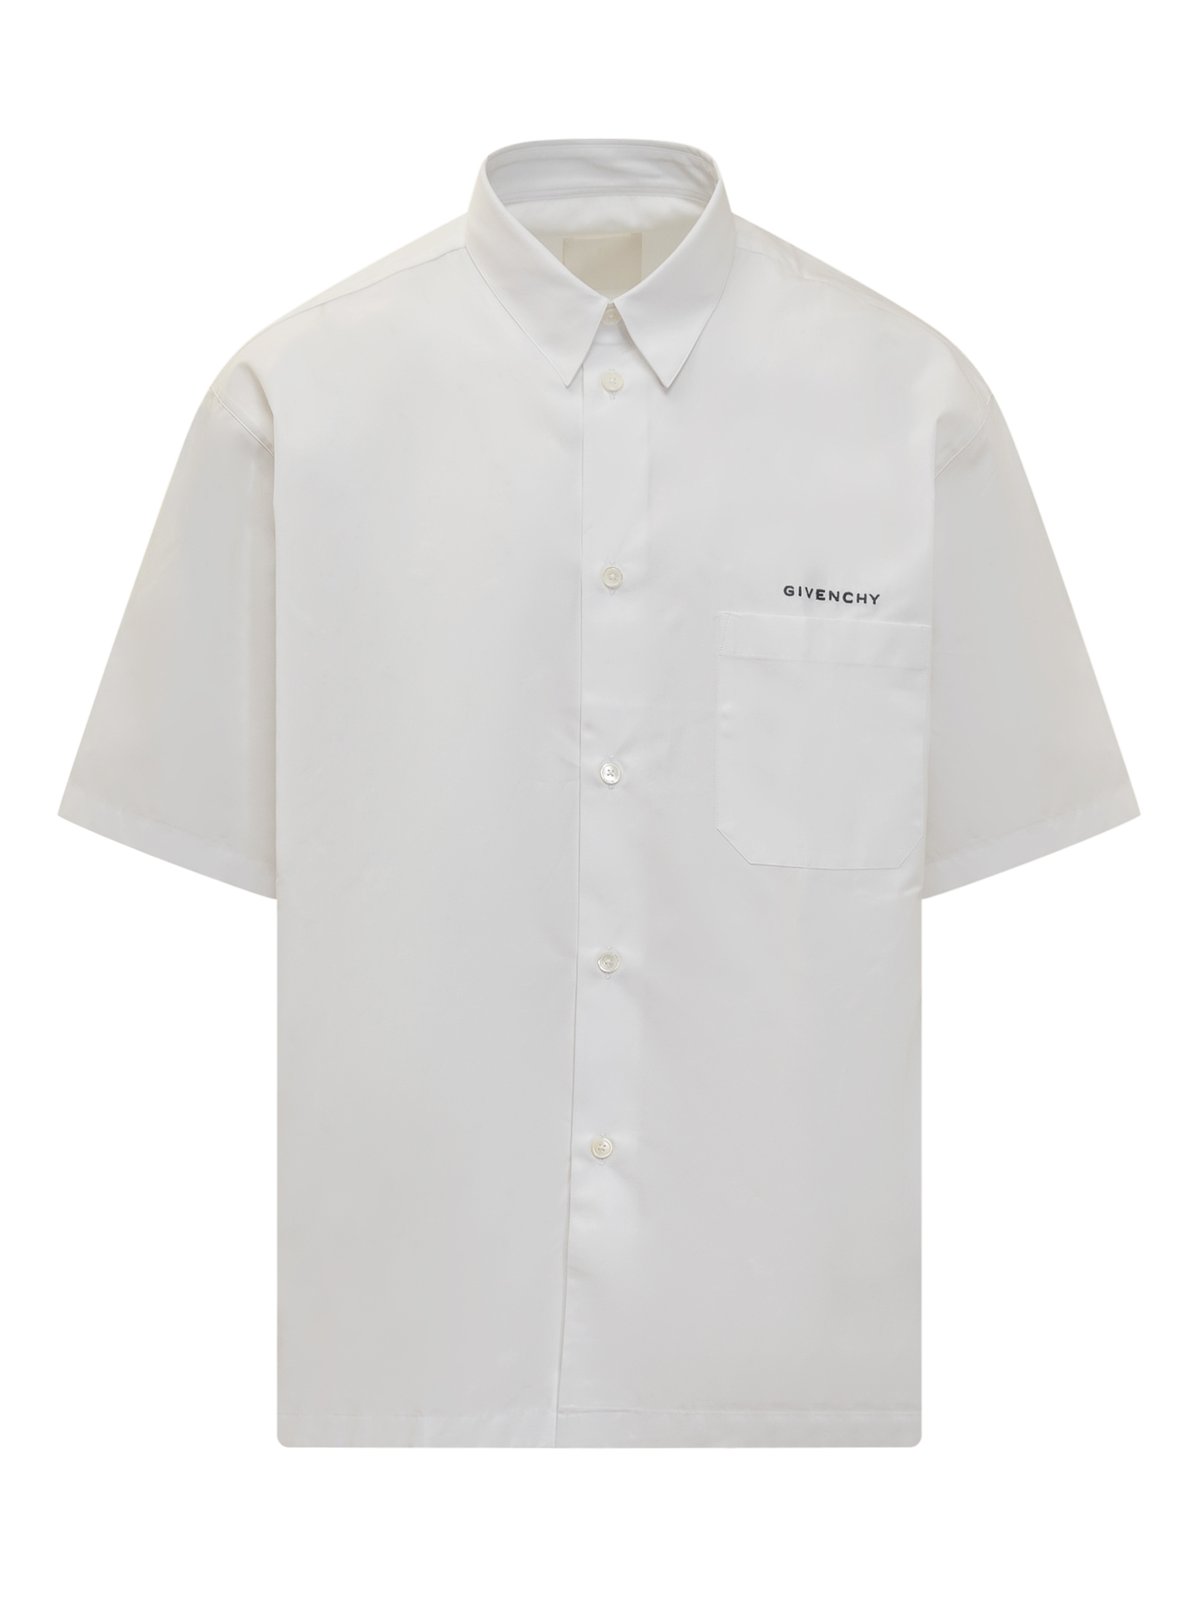 Givenchy 지방시 로고 프린트 칼라 반소매 셔츠